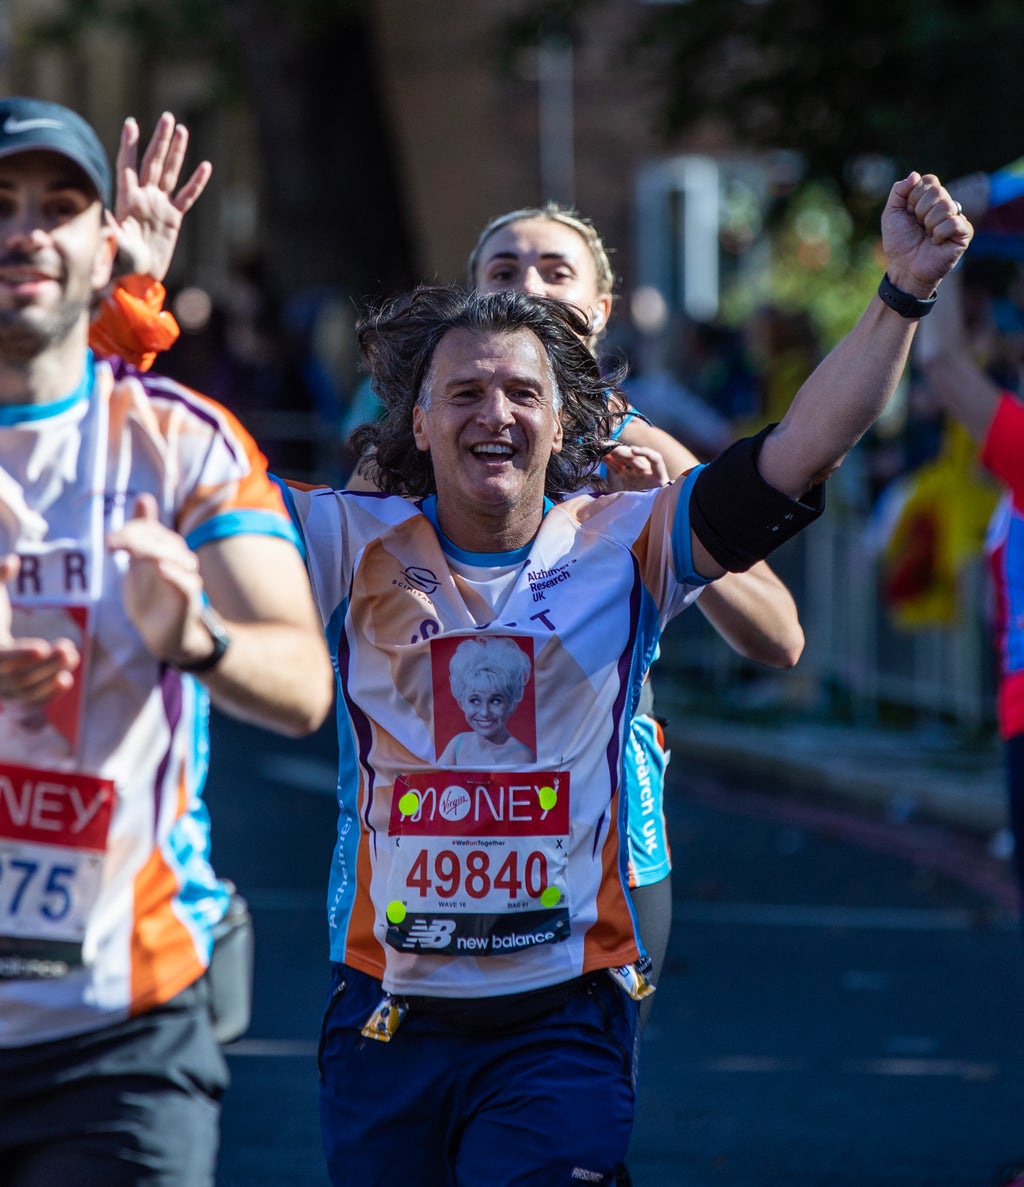 Scott Mitchell runs London Marathon wearing tribute to late wife Barbara Windsor